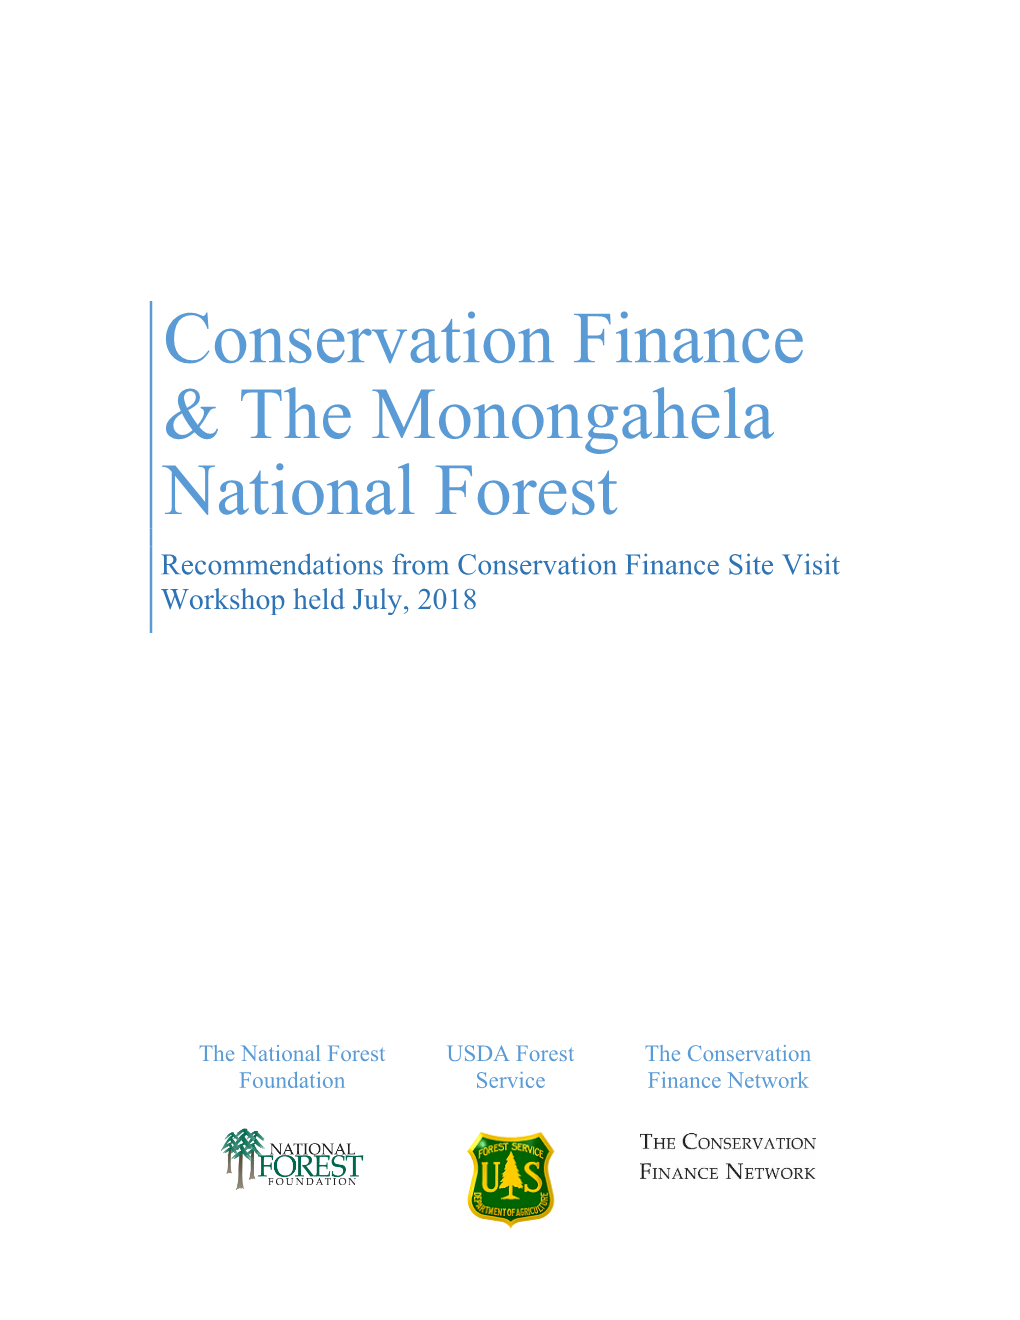 Conservation Finance & the Monongahela National Forest